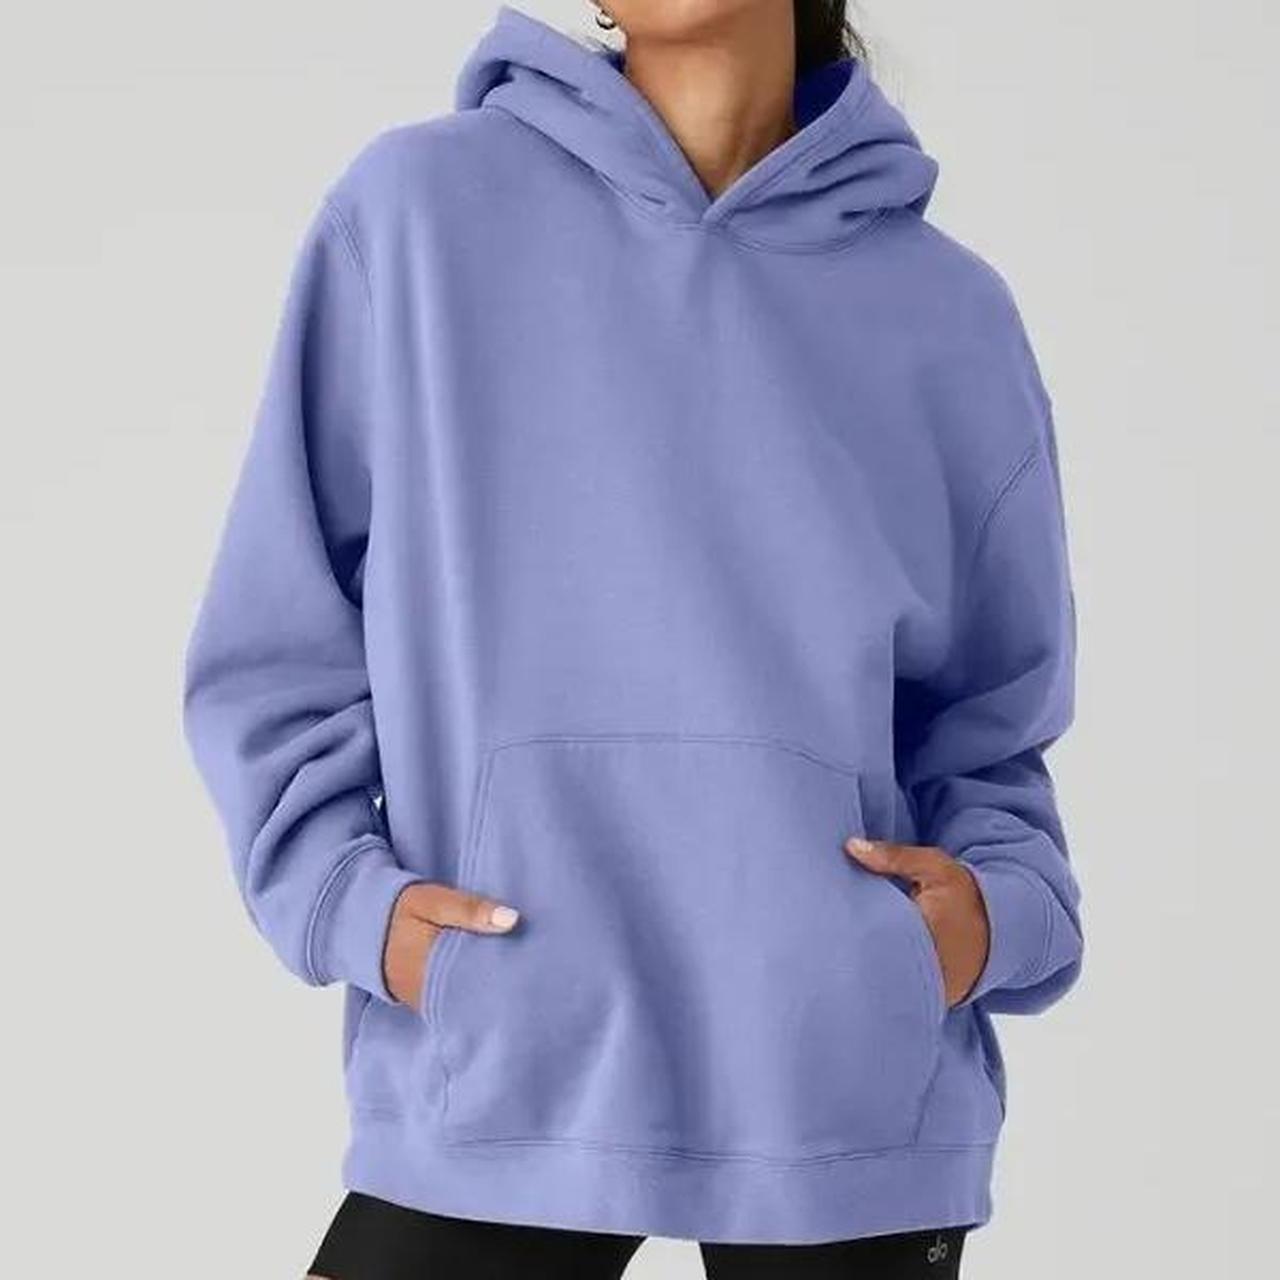 ALO yoga sweatshirt fleece bra brand new originally - Depop